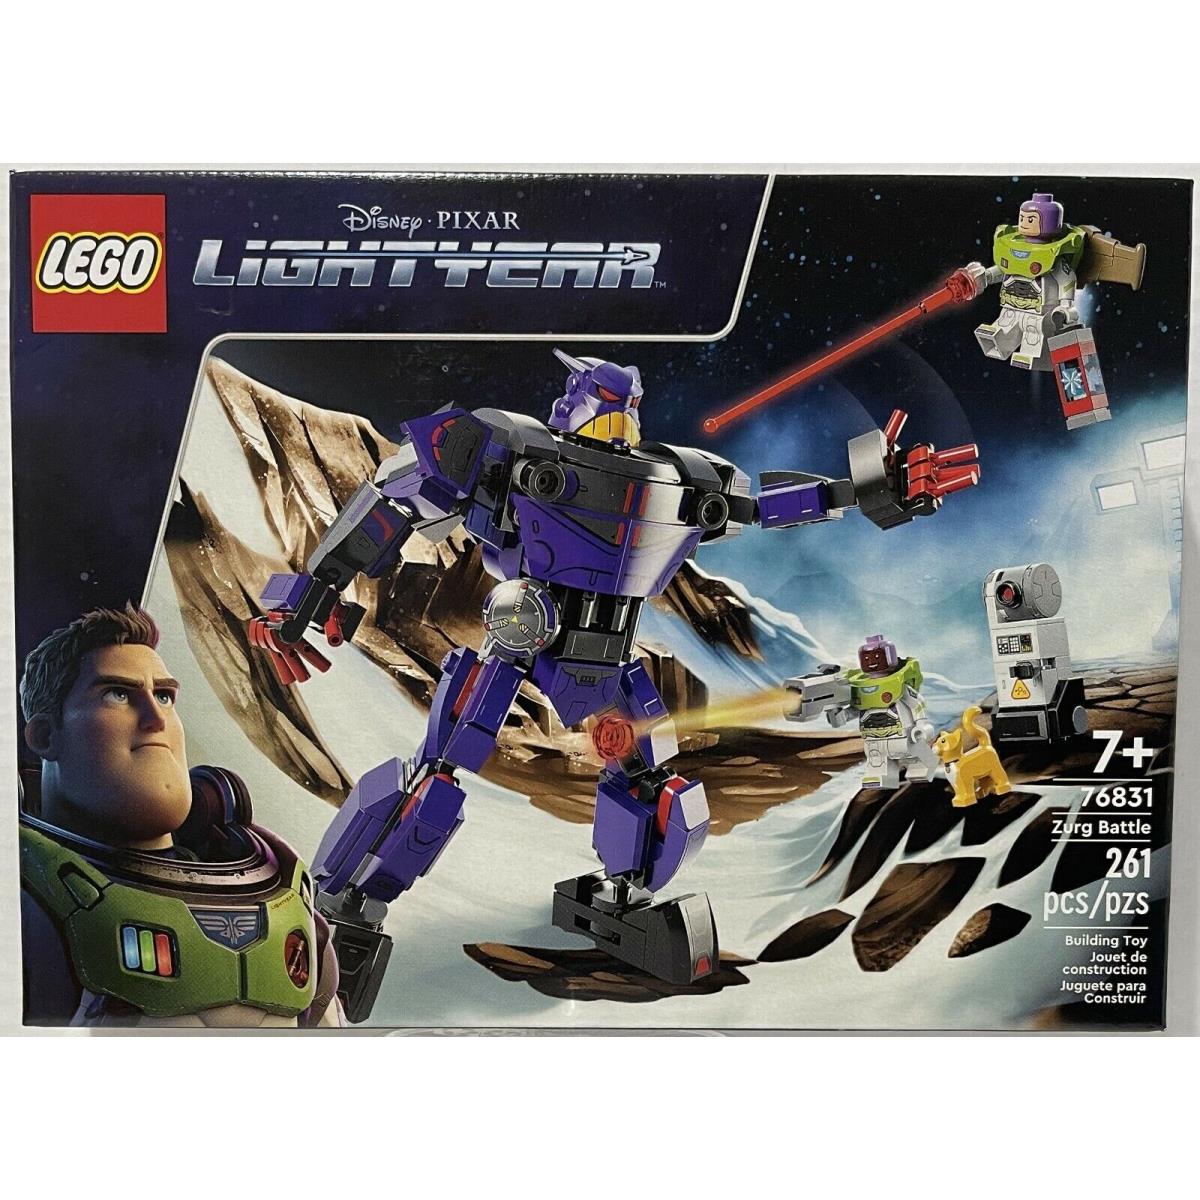 Lego Disney Pixar Lightyear Zurg Battle 76831 261pcs 7+ Release